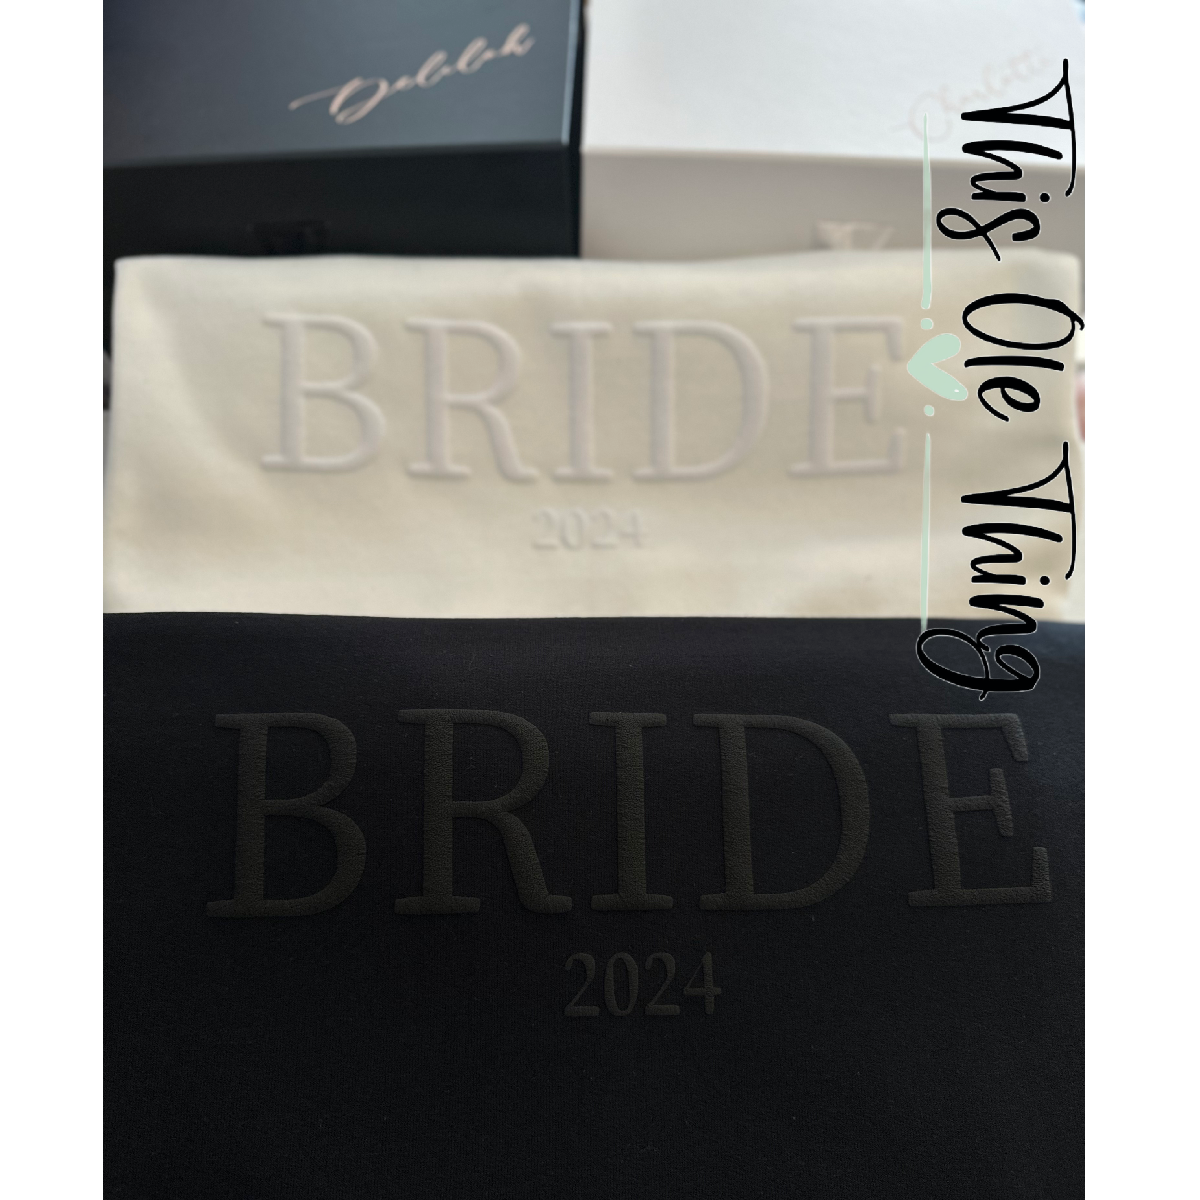 Custom “BRIDE” sweatshirt